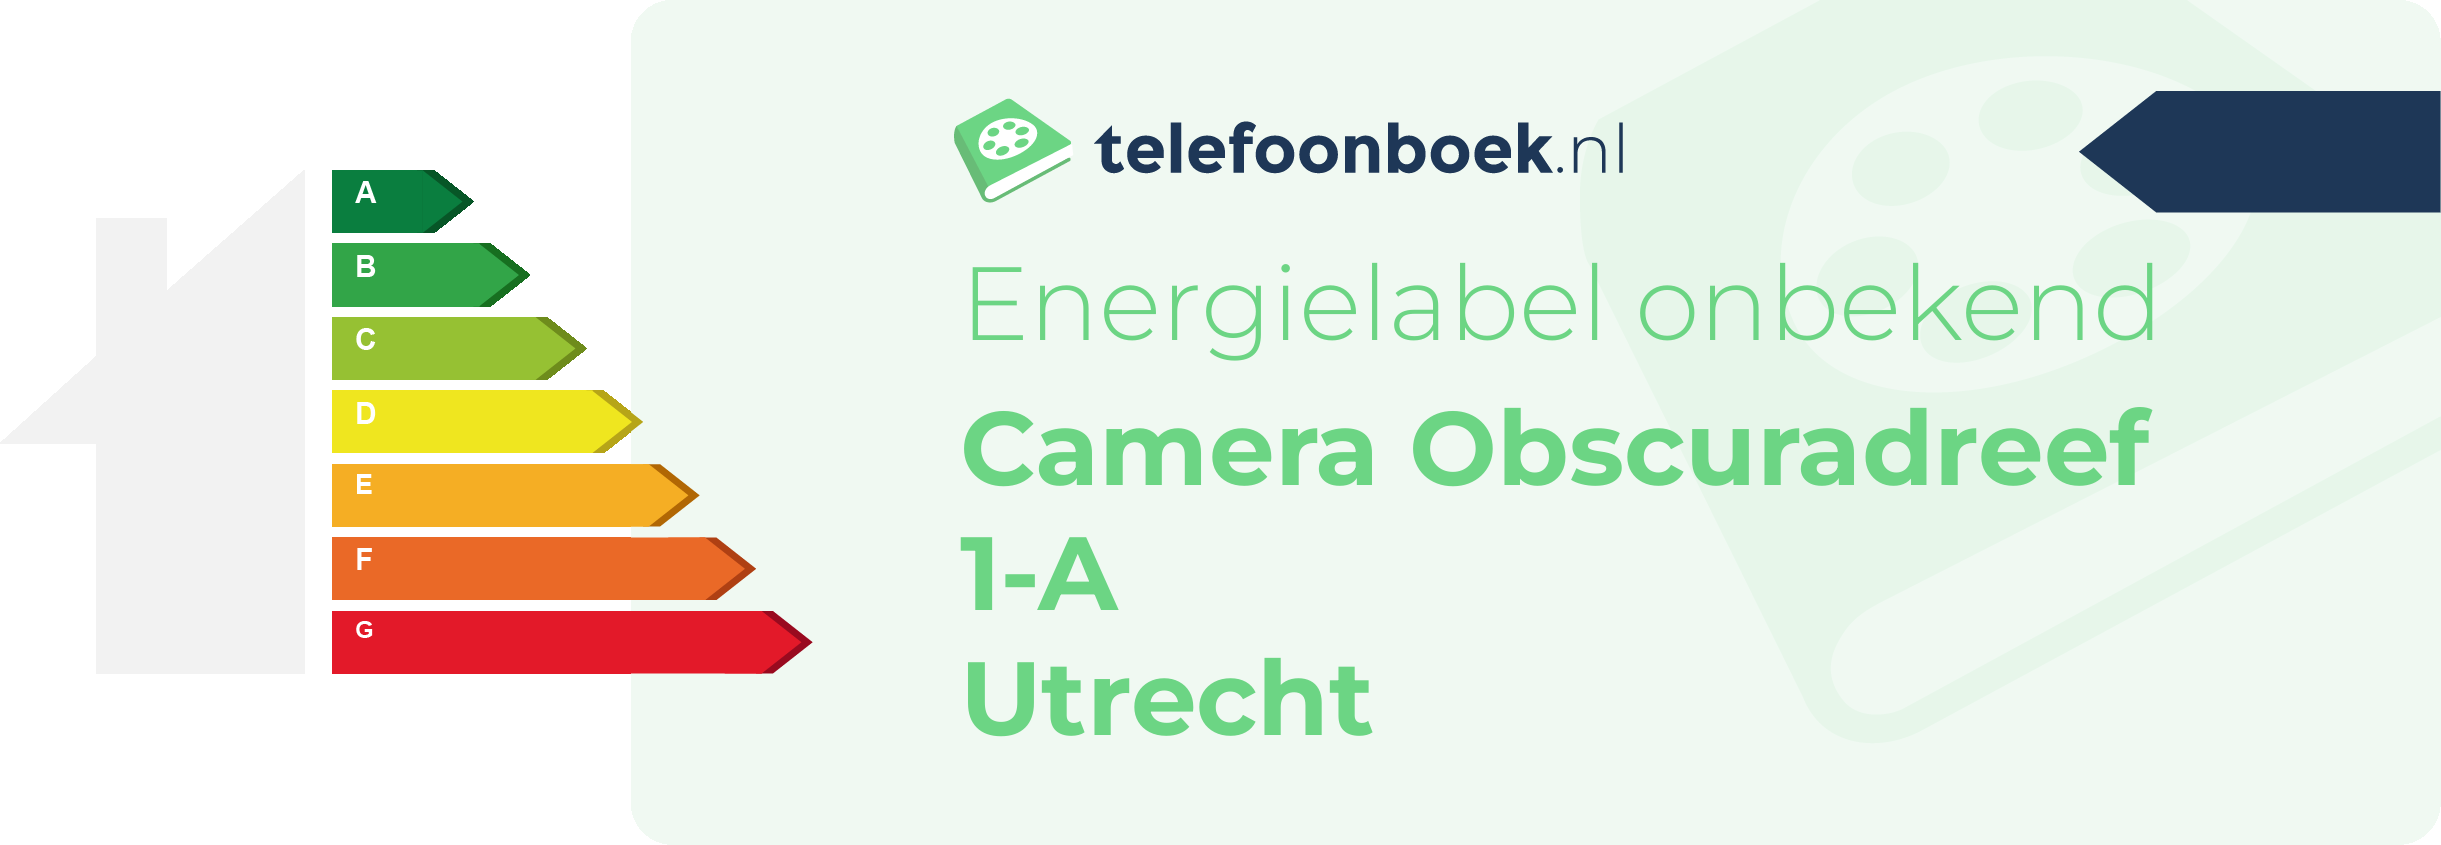 Energielabel Camera Obscuradreef 1-A Utrecht